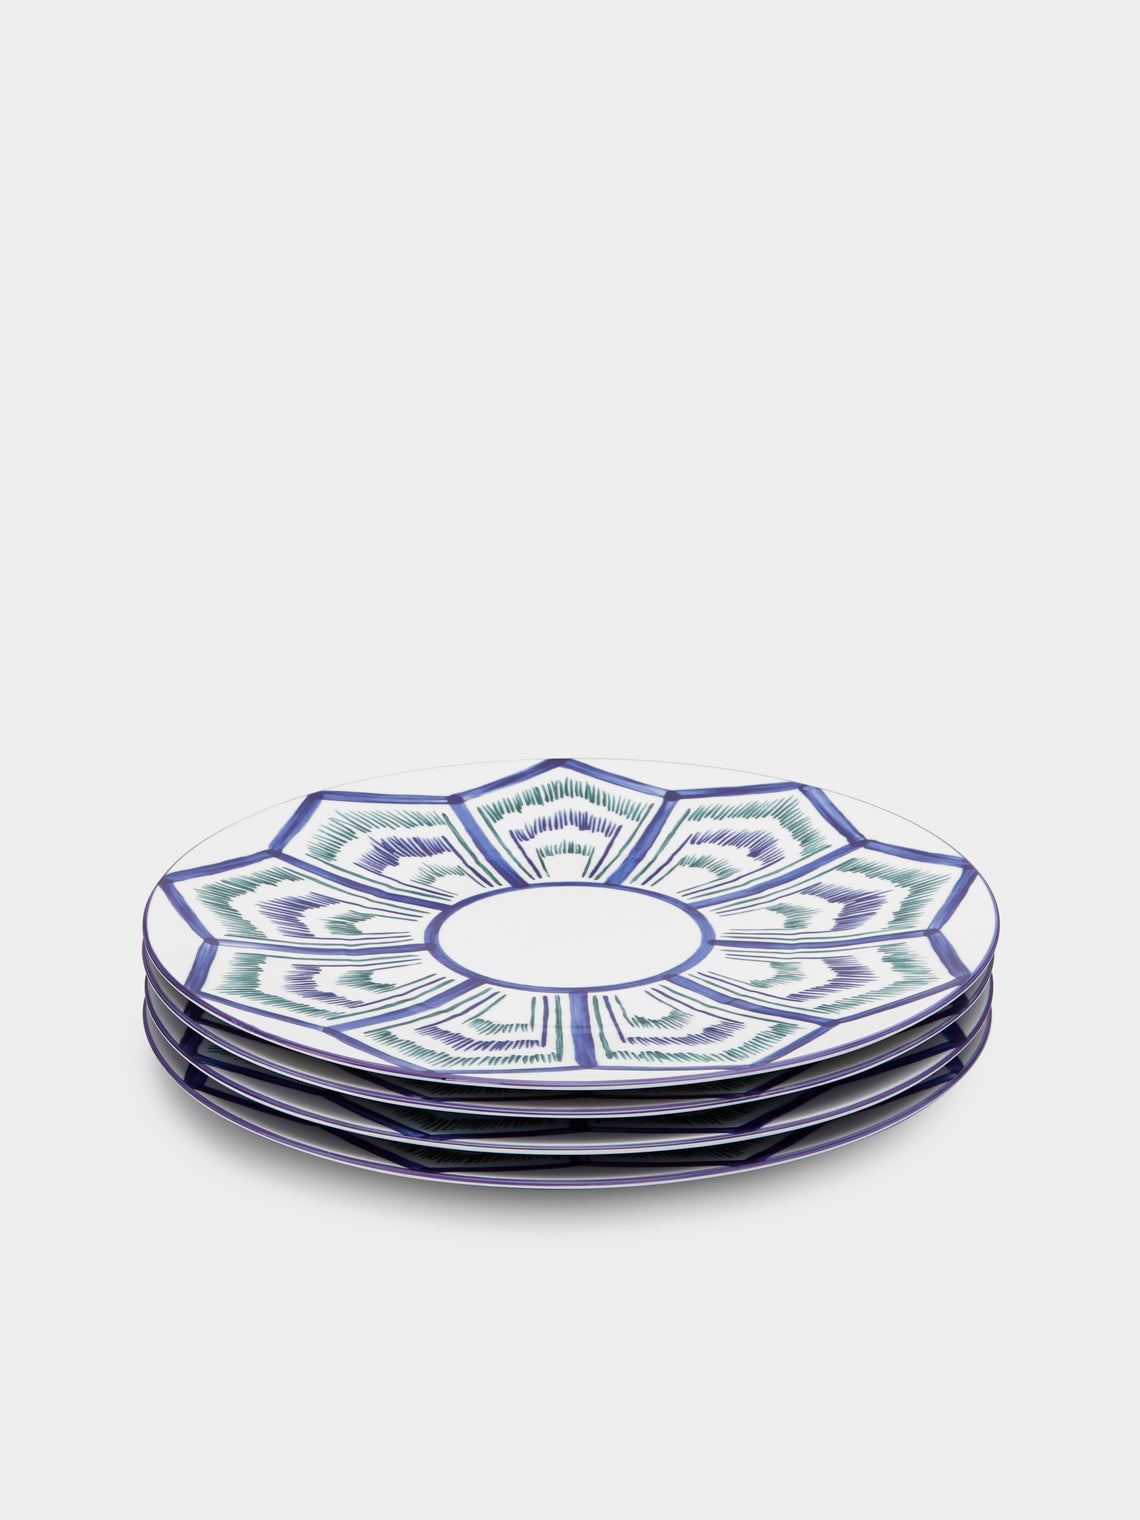 Molecot - Mallorca Porcelain Charger Plates (Set of 4) -  - ABASK